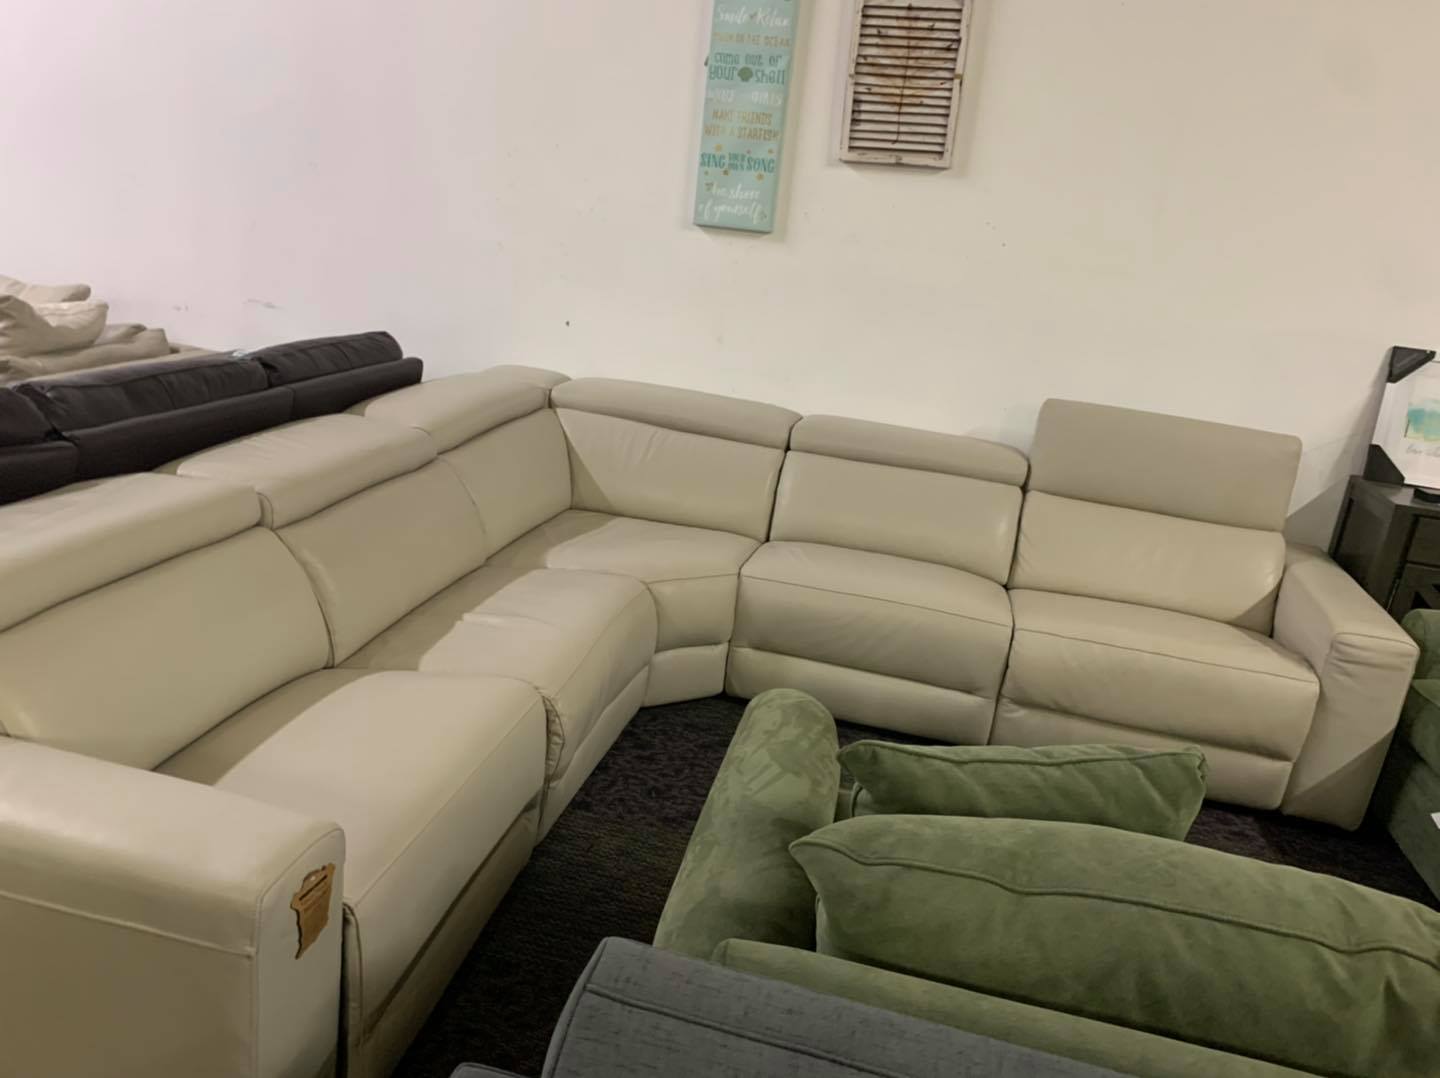 macys nevio 5-pc leather sectional sofa